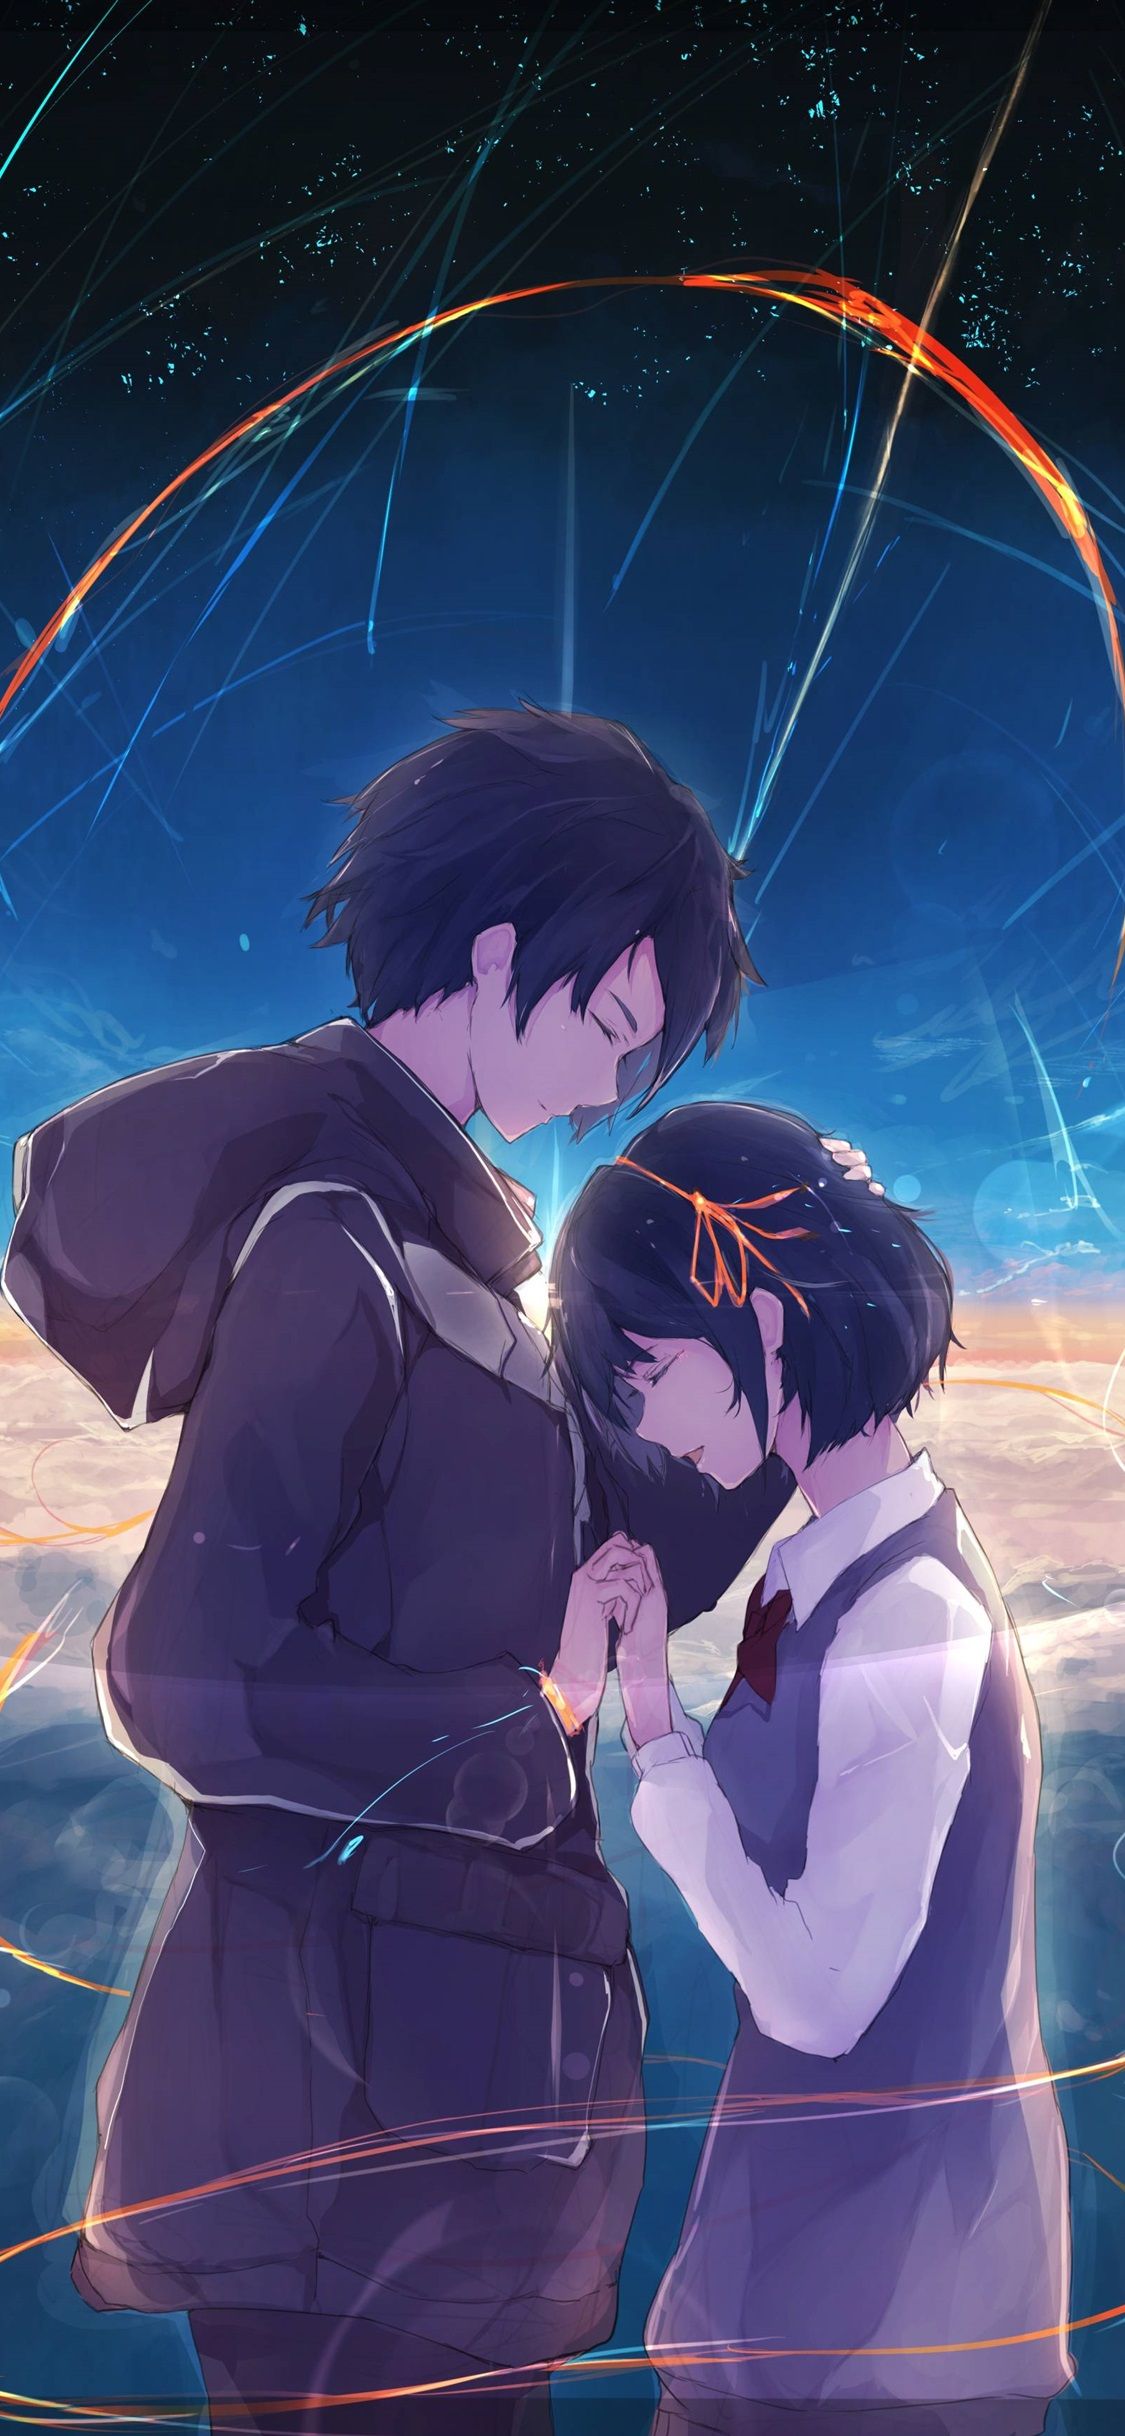 Anime Girl Huging Boy Wallpapers